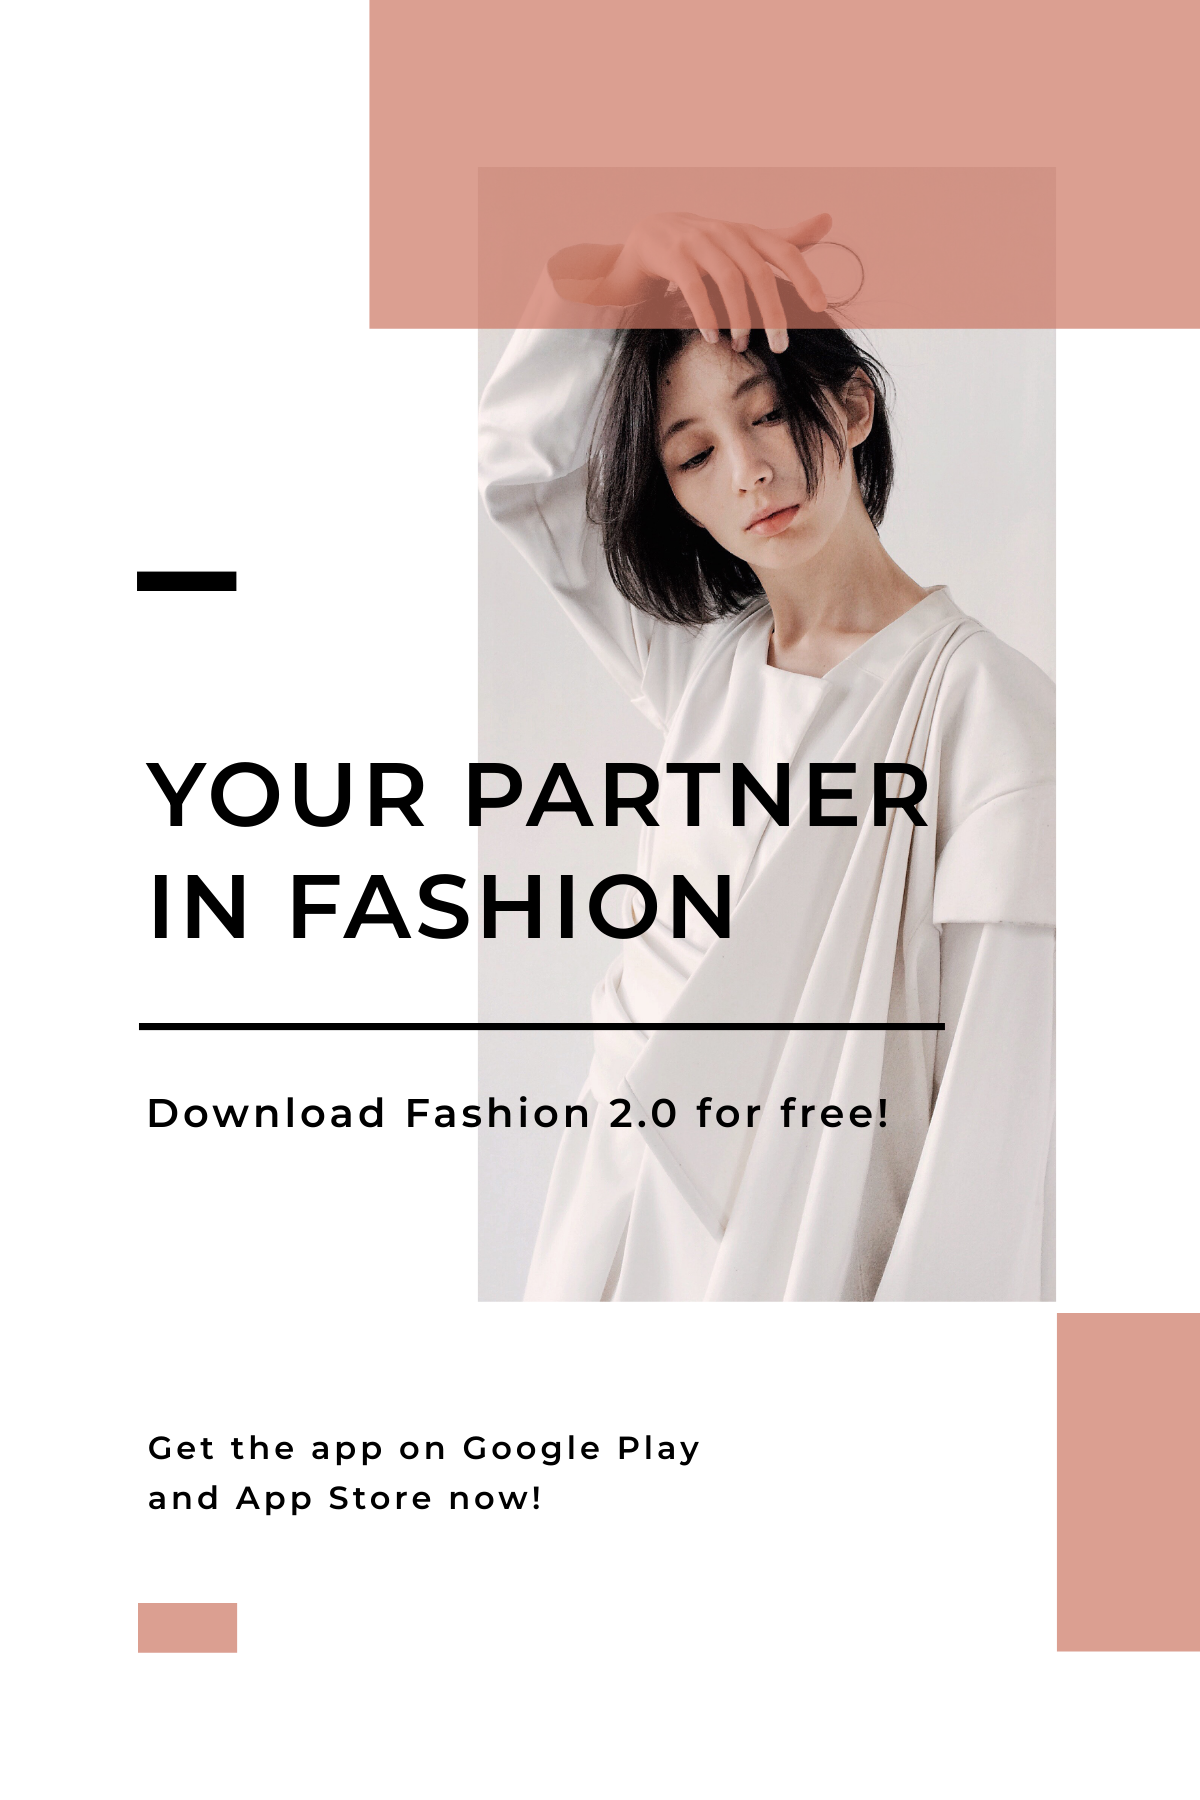 Minimalistic Fashion App Promotion Pinterest Pin Template